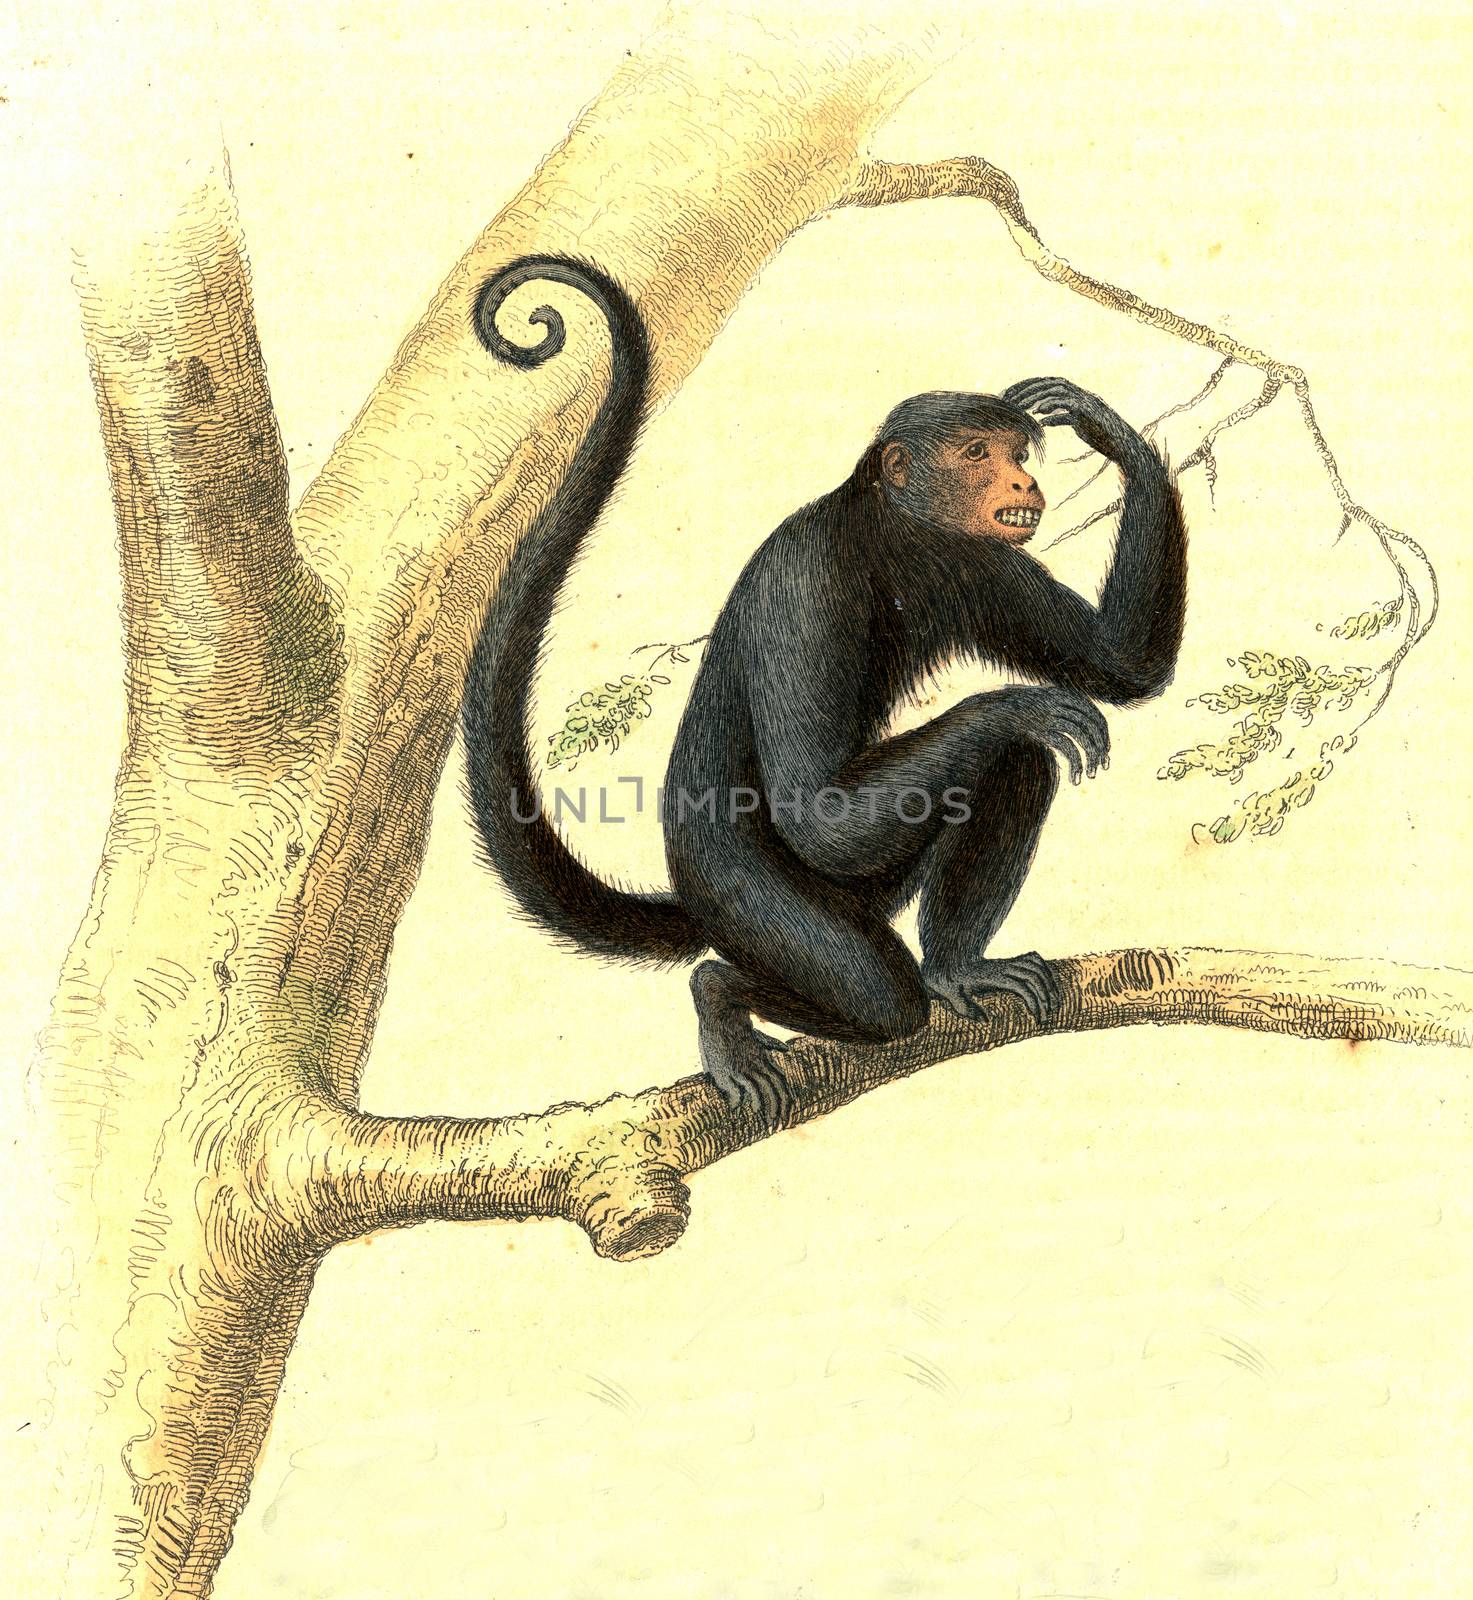 The Coaita, Howler monkeys, vintage engraved illustration. From Buffon Complete Work.
